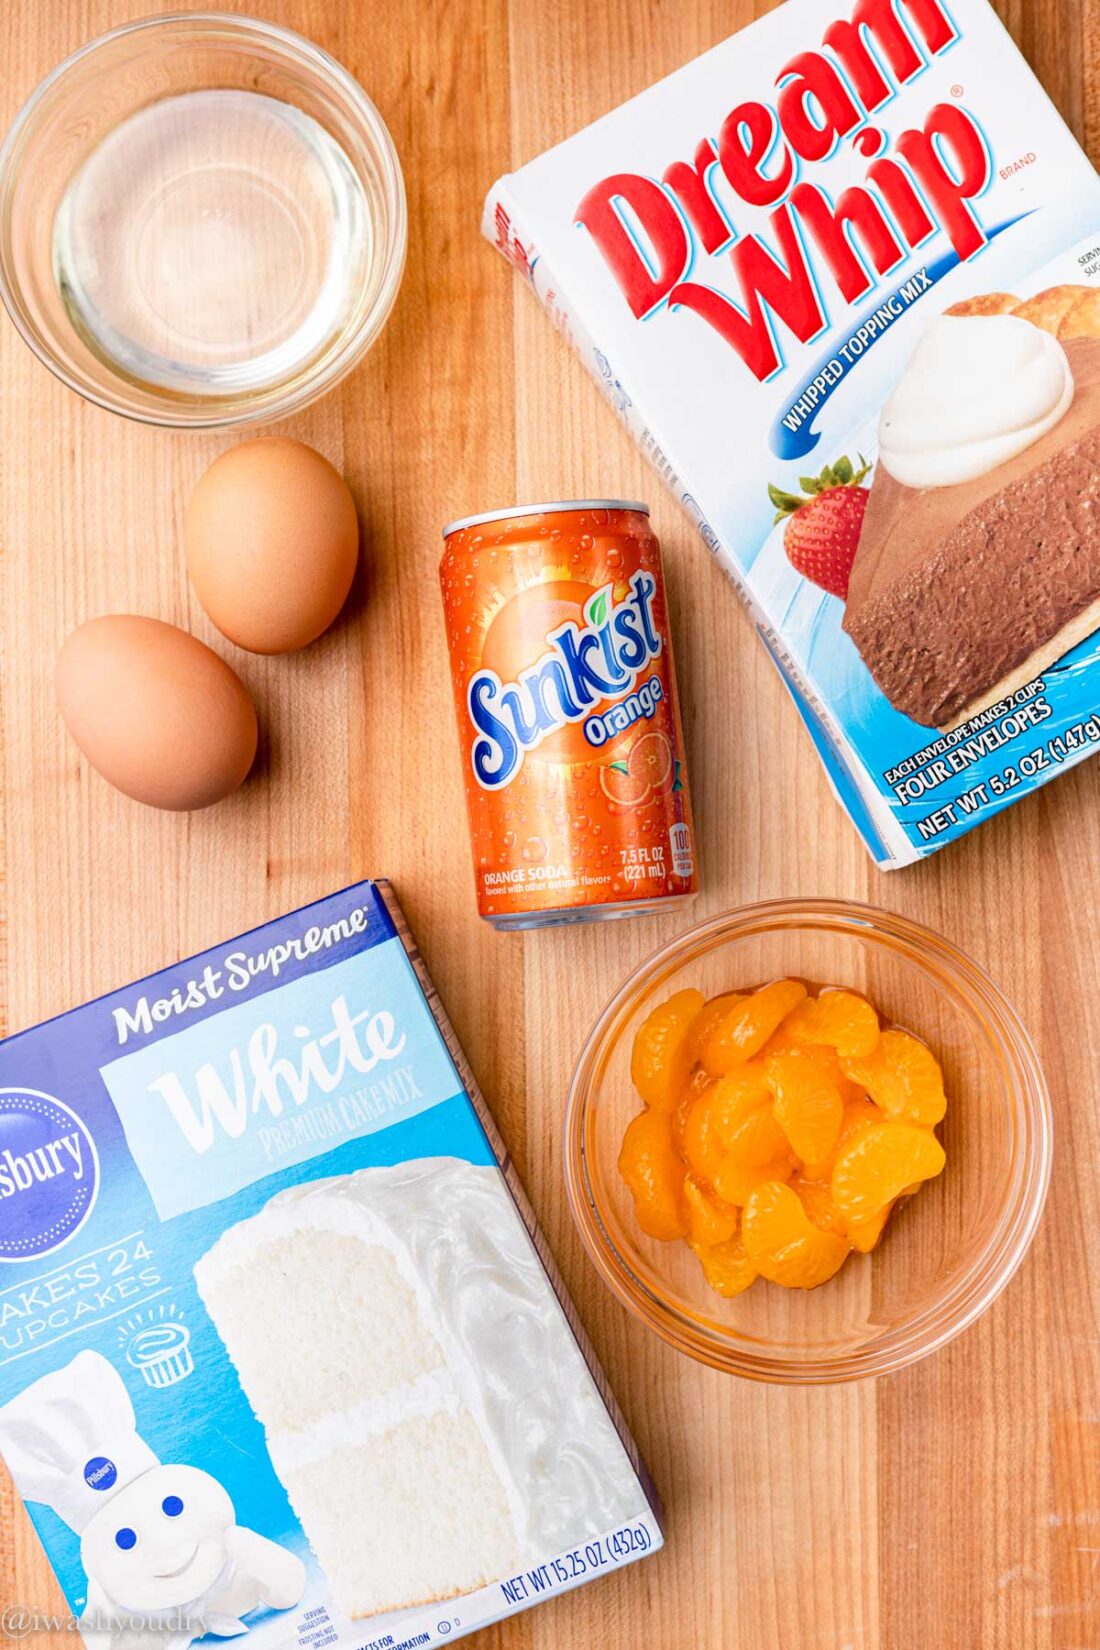 ingredients for orange crush cake including orange soda, cake mix, eggs, Dream Whip, and mandarin oranges